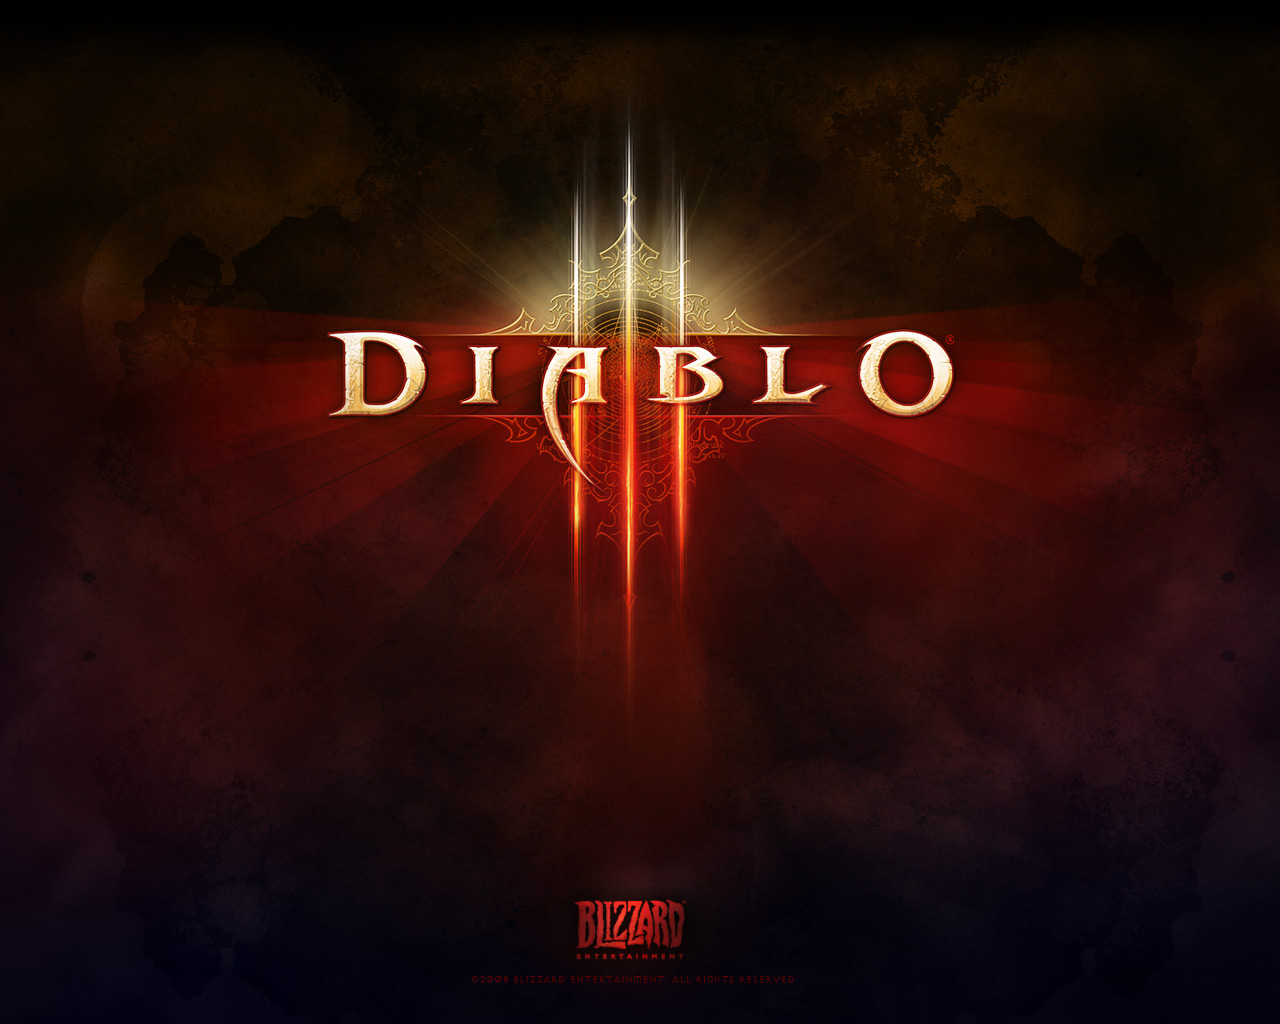 Diablo 3 Most Pre-Ordered PC Game Ever on Amazon.com